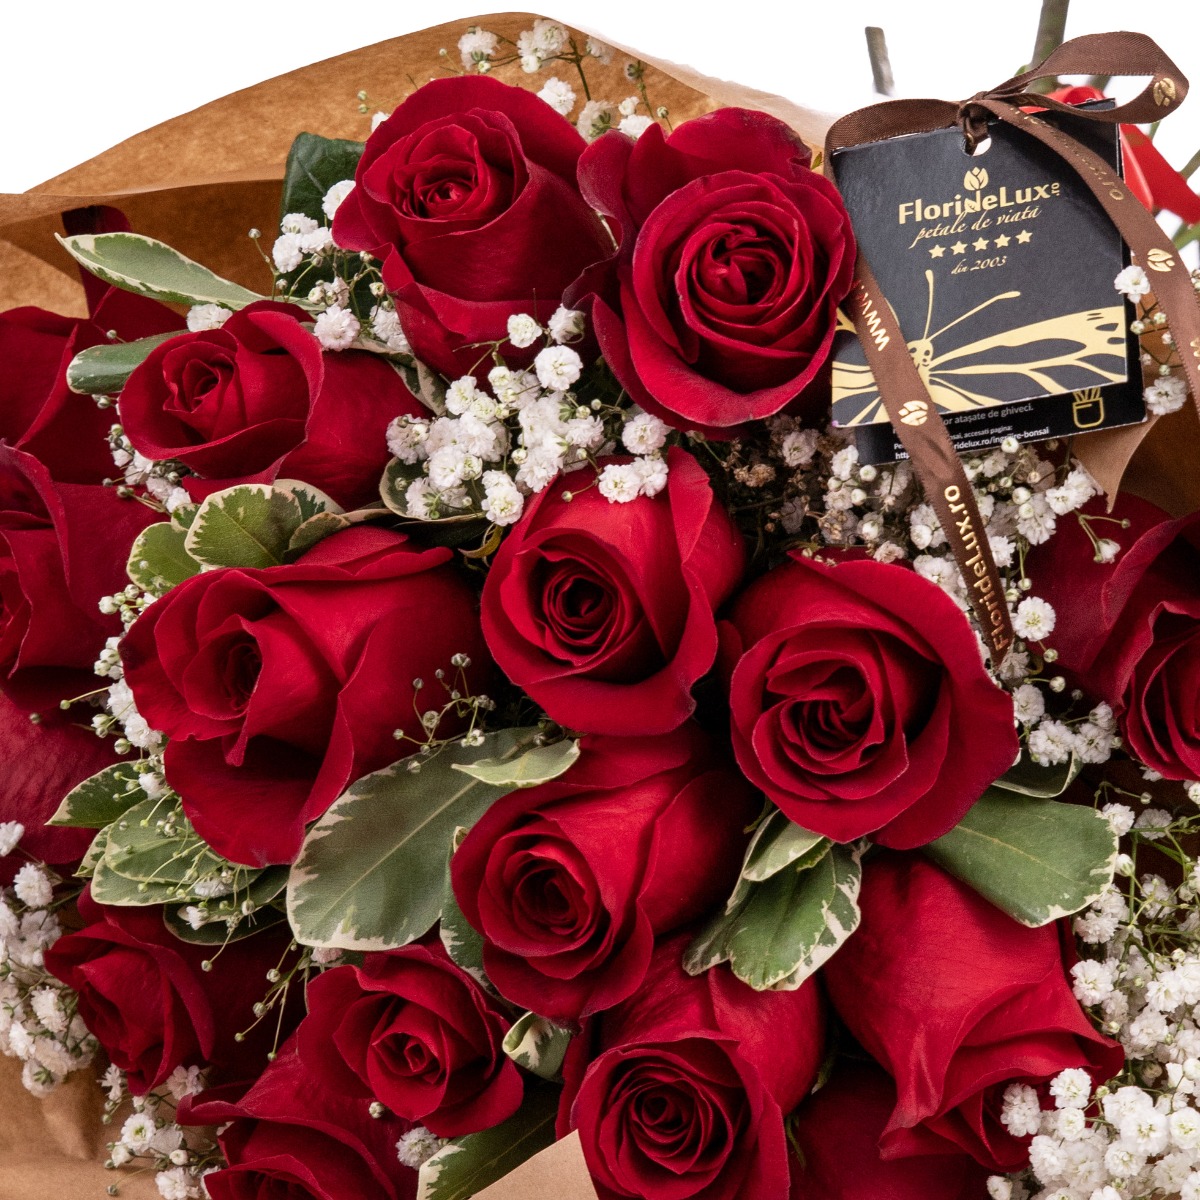 Buchet romantic trandafiri With You